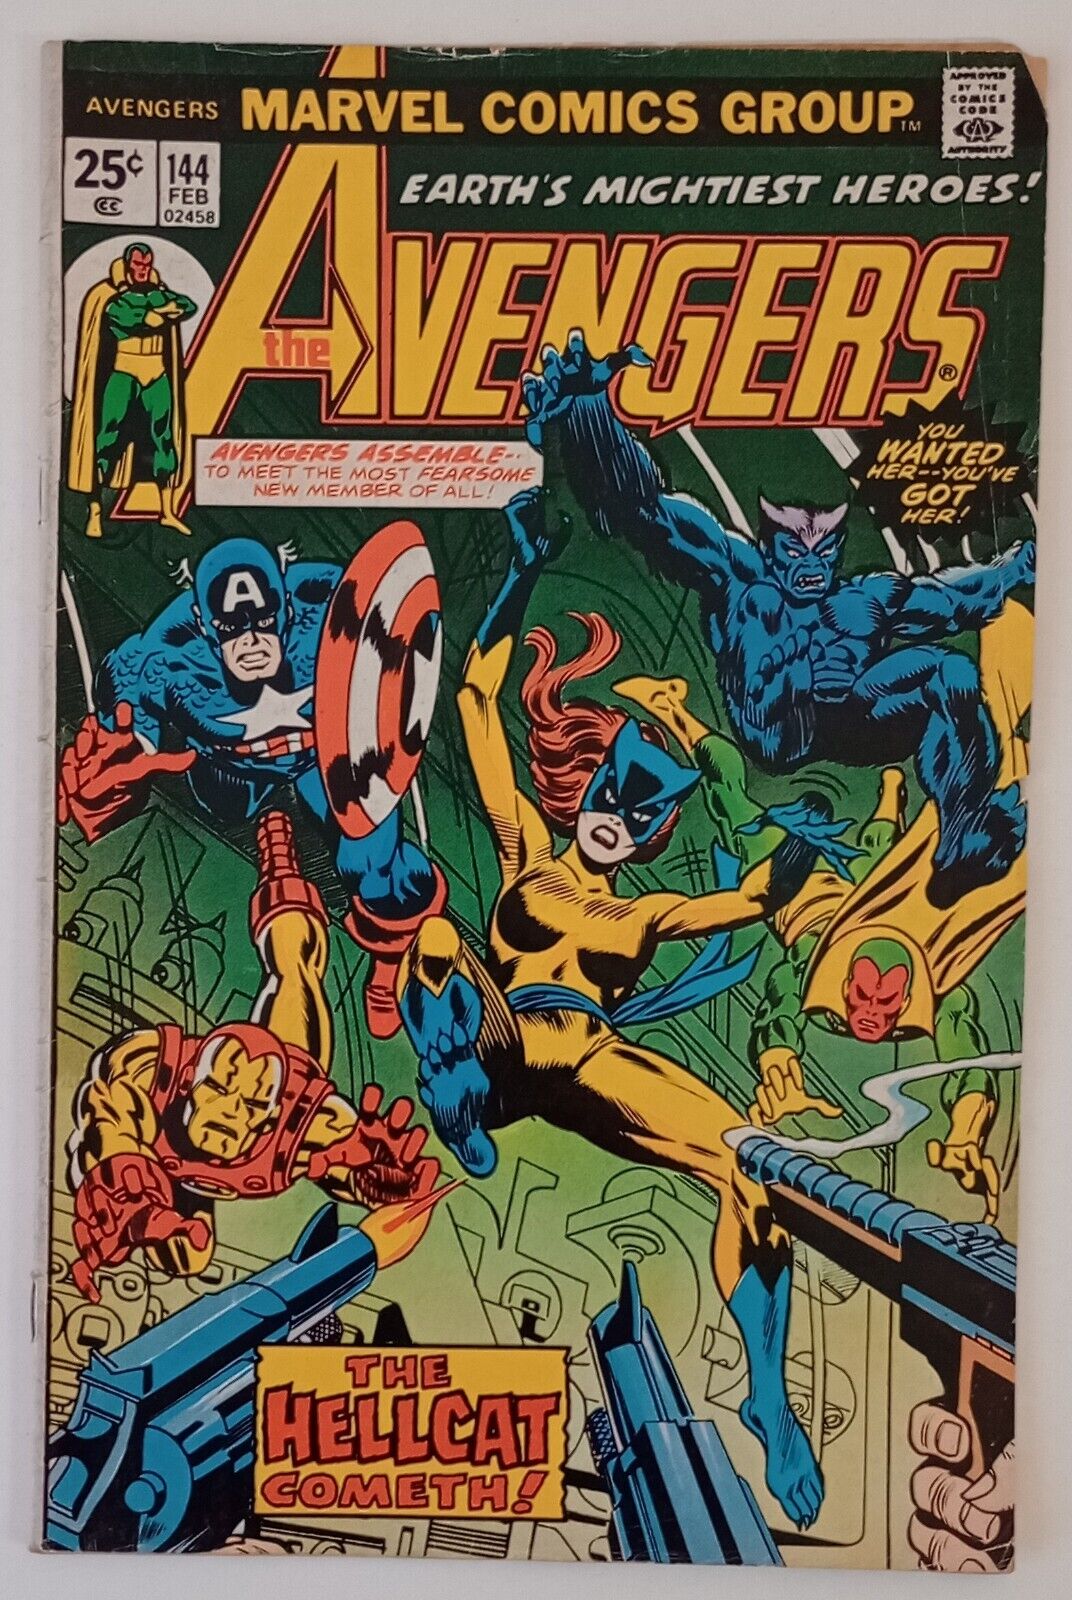  Avengers #144 (1st appearance of Hellcat) 1976